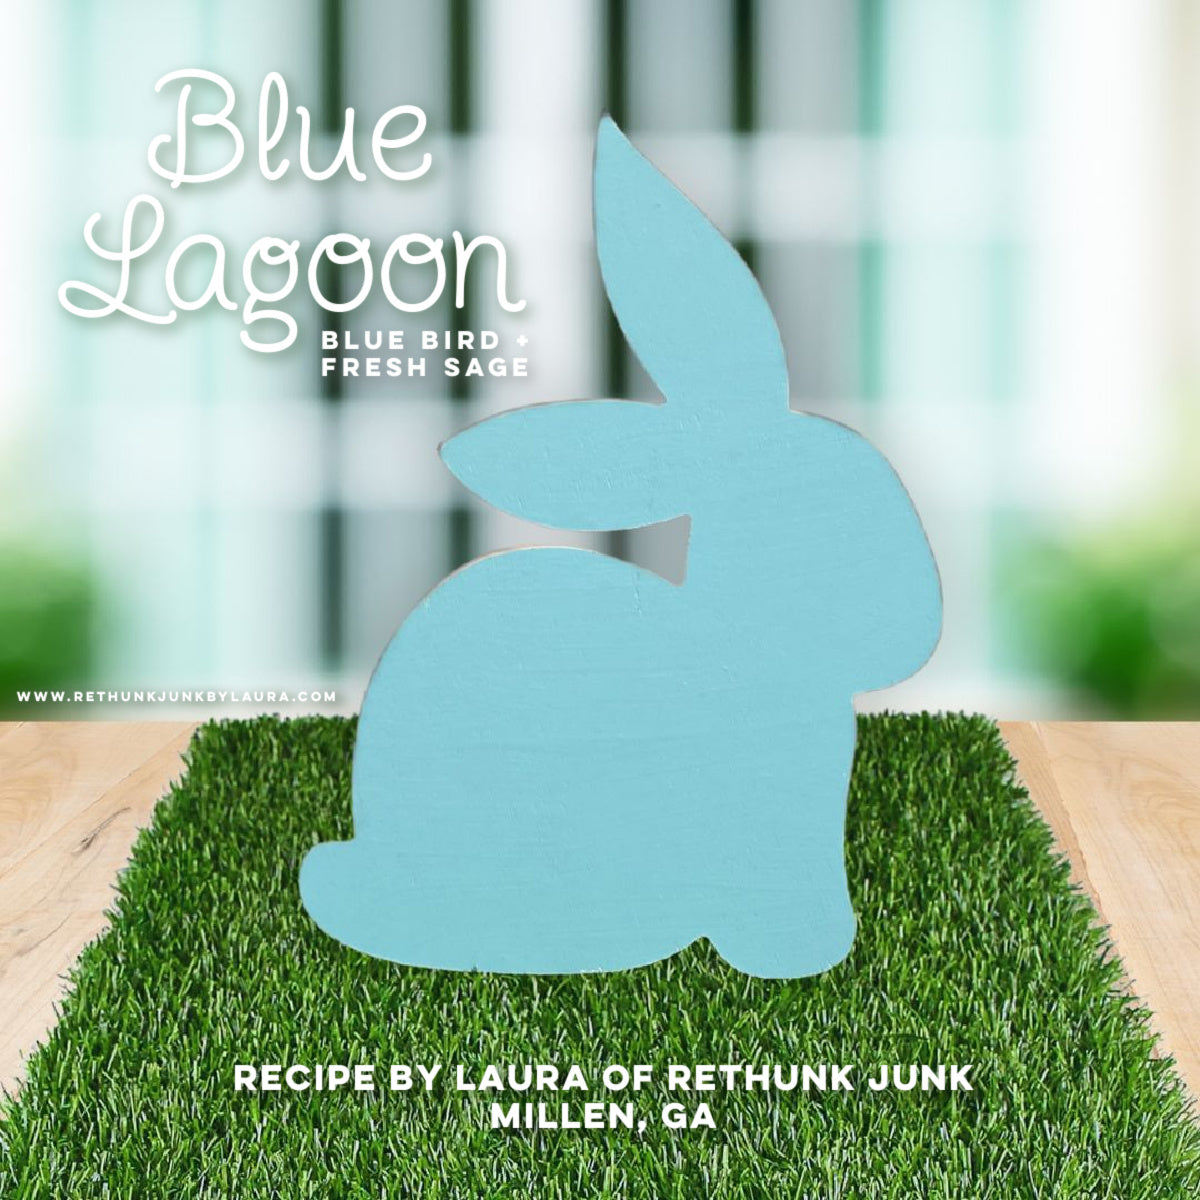 Blue Lagoon - Paint Recipe